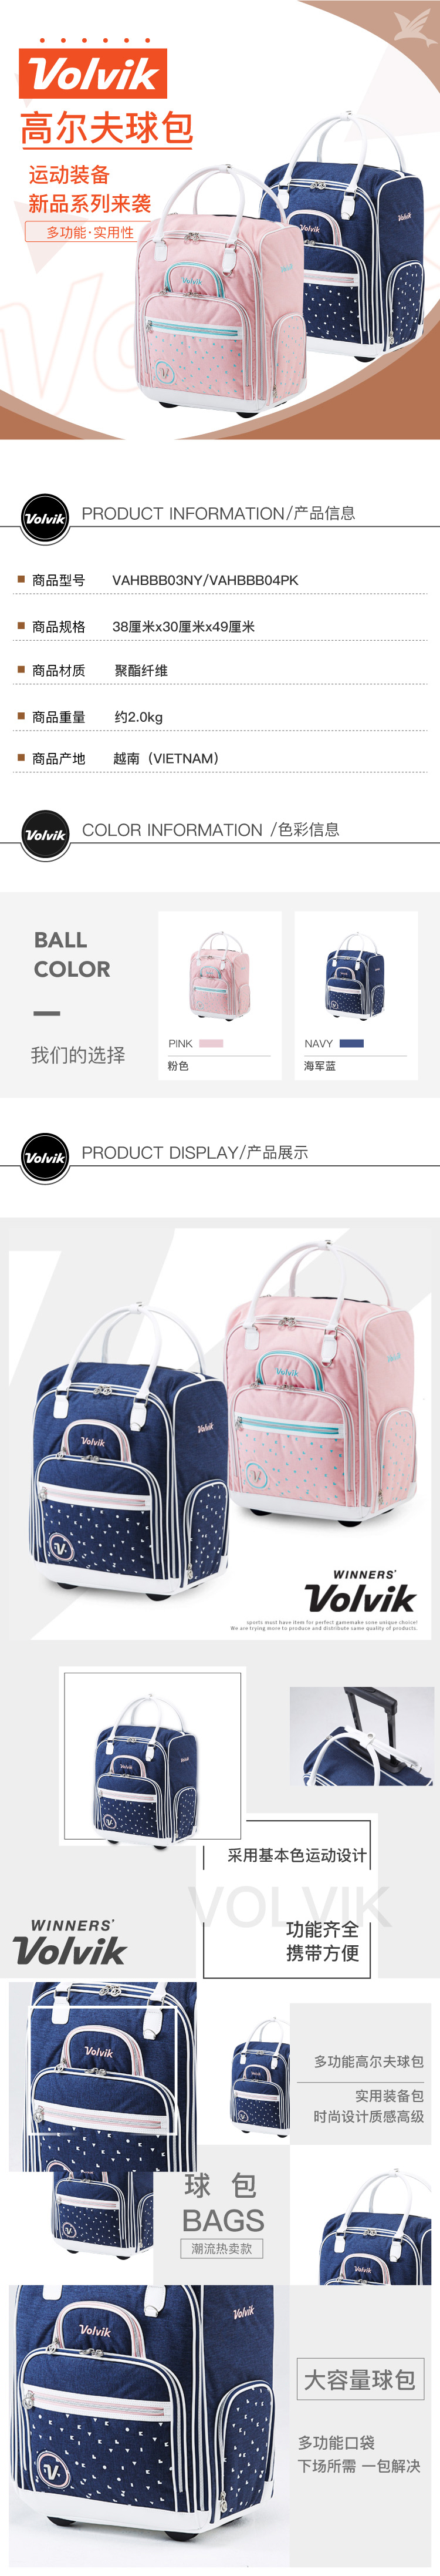 VOLVIK韩国正品高尔夫球包 新款时尚轻便大容量休闲轮式波士顿包